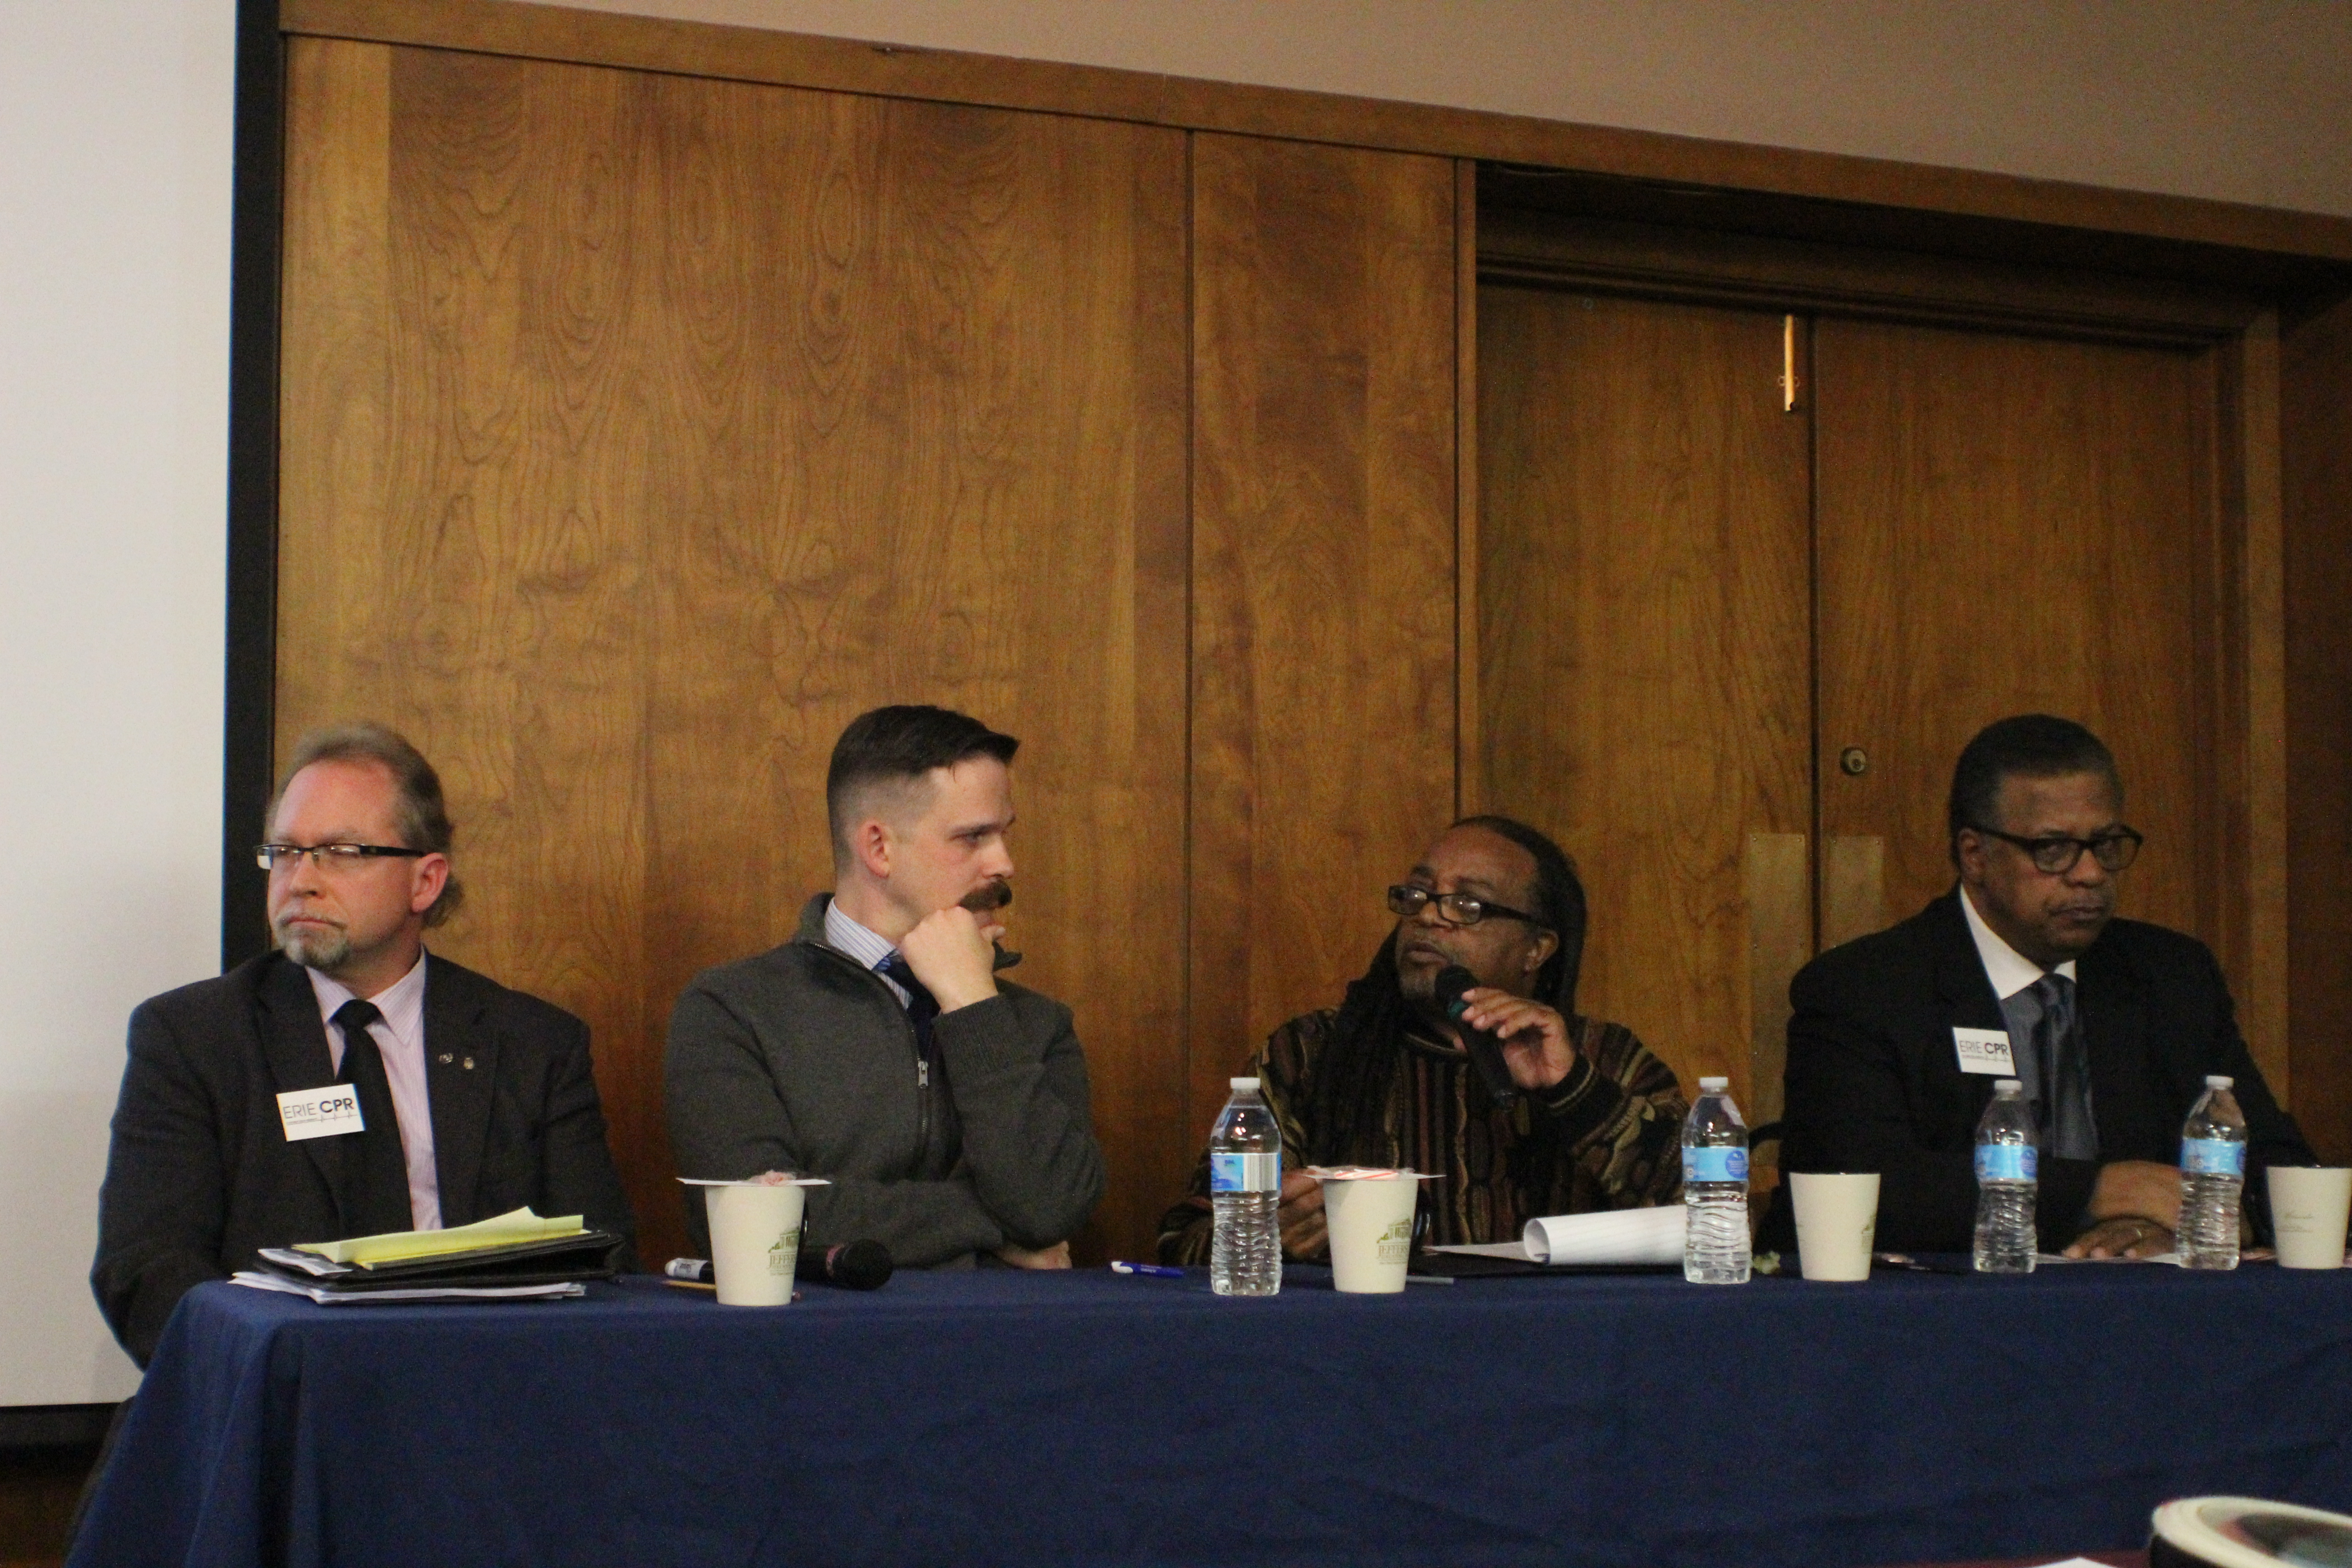 Panel Featuring [l-r] Adam Trott, Jay Breneman, Gary Horton, and Rev. Charles Mock